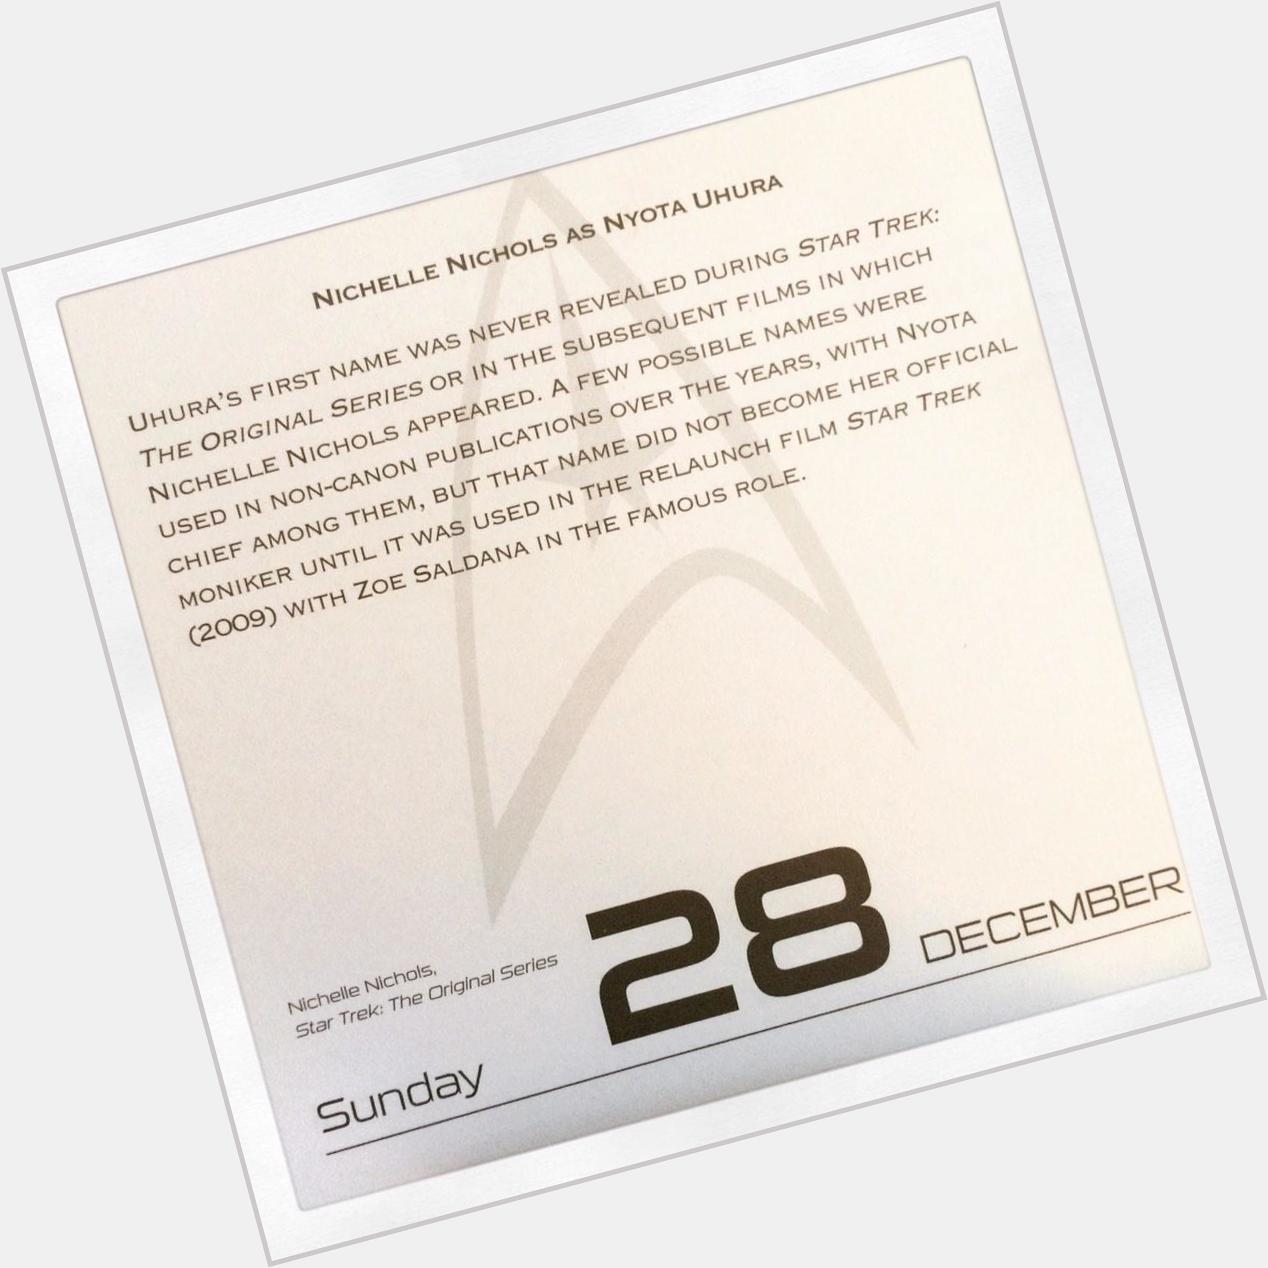 This Day in Trek - December 28, 2014 Happy Birthday to the ever amazing Nichelle Nichols! 